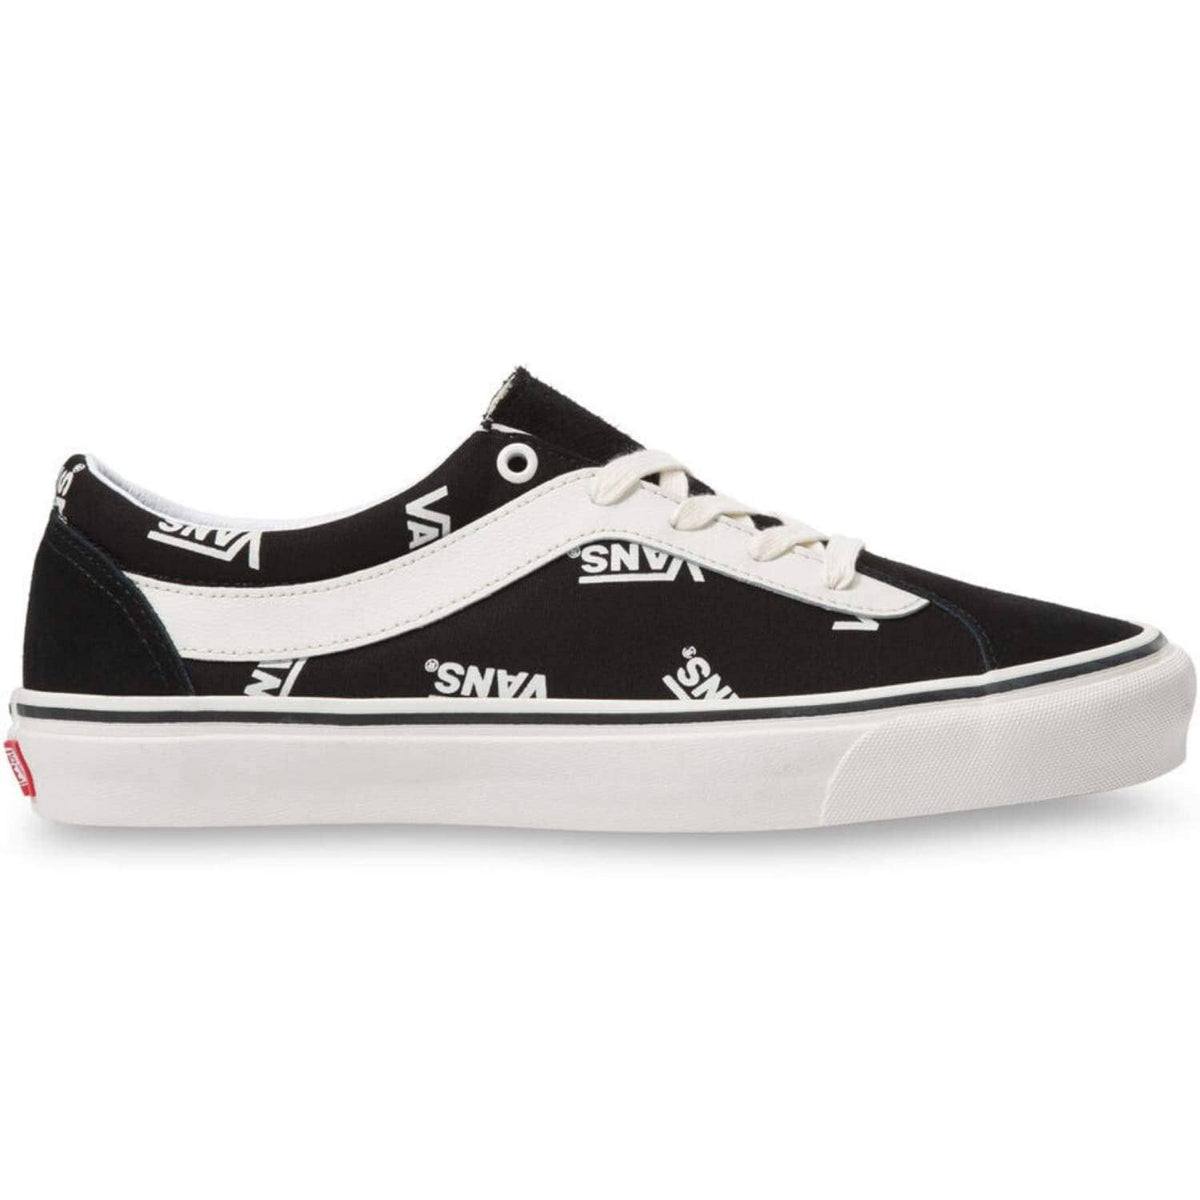 Vans Bold NI Skate Shoes (Vans Block) - Black/Marshmallow Mens Skate Shoes by Vans